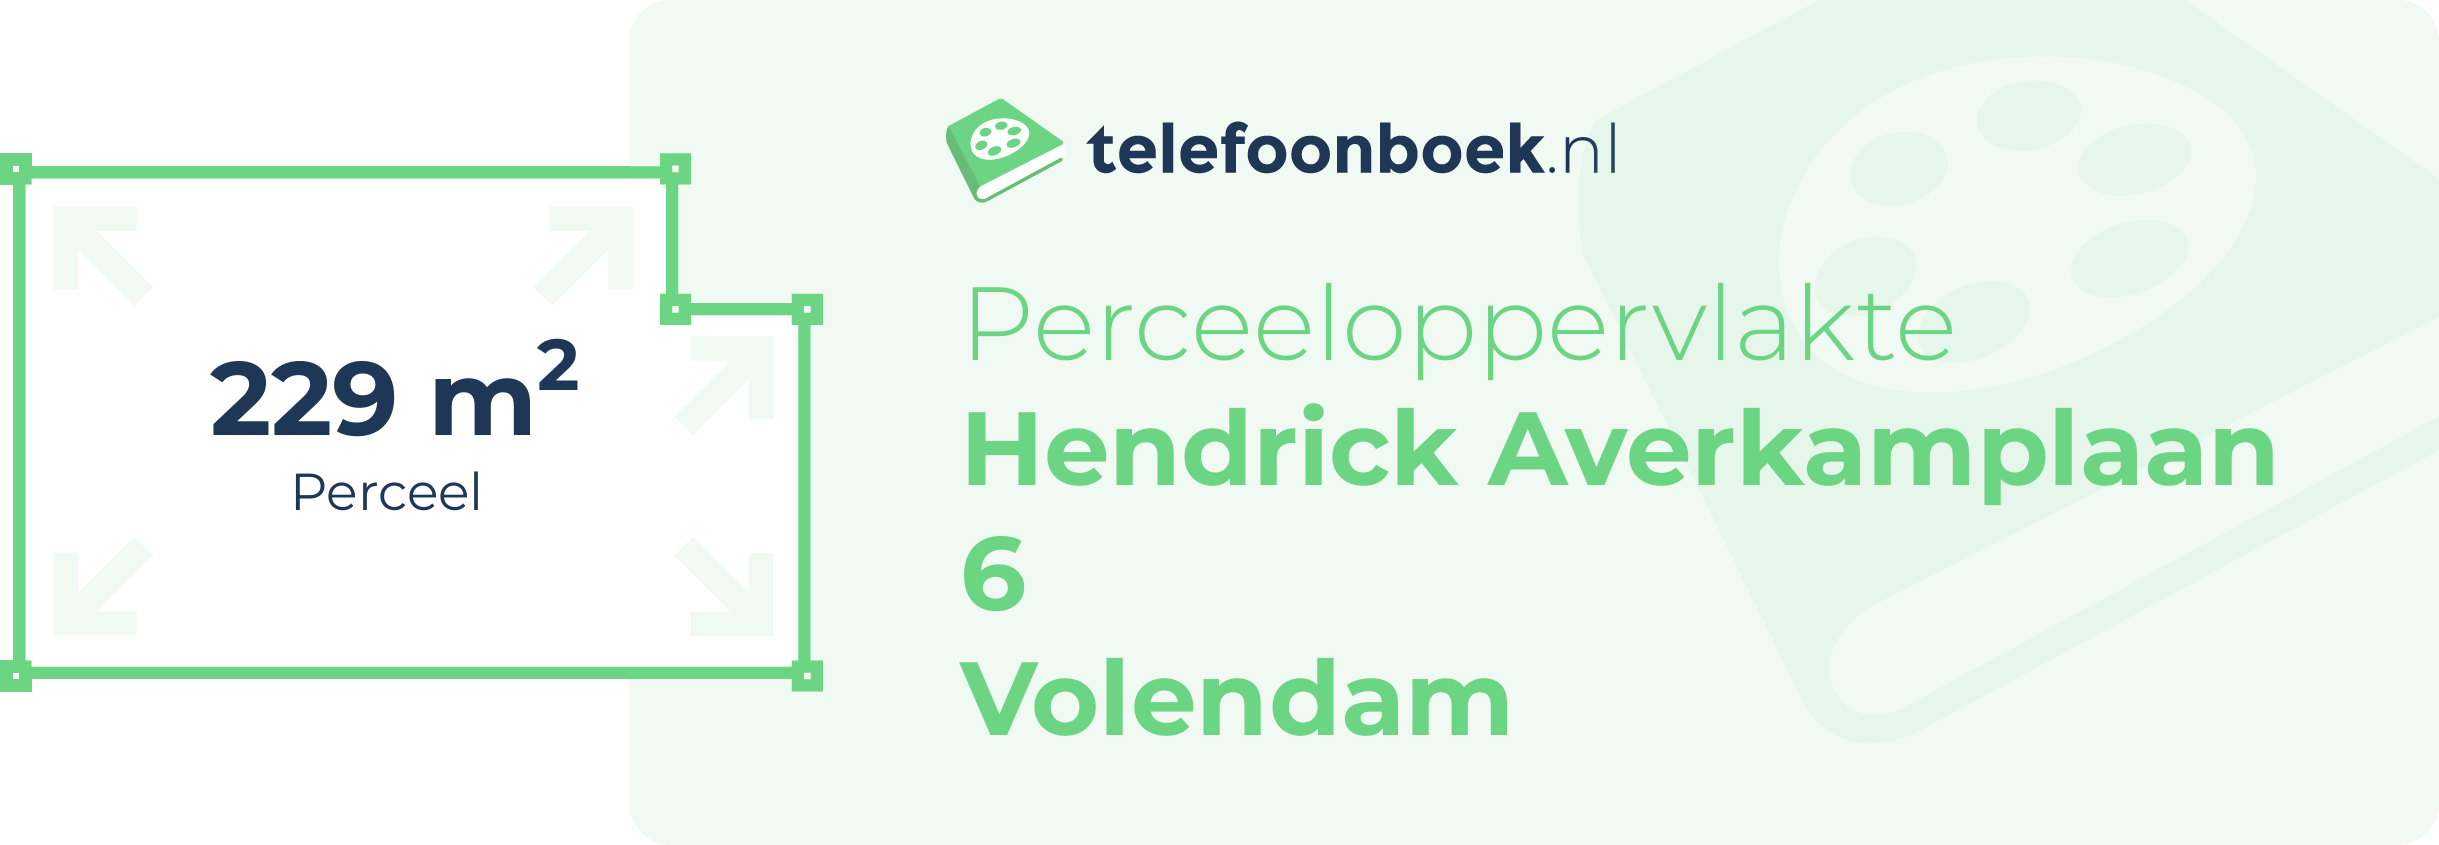 Perceeloppervlakte Hendrick Averkamplaan 6 Volendam